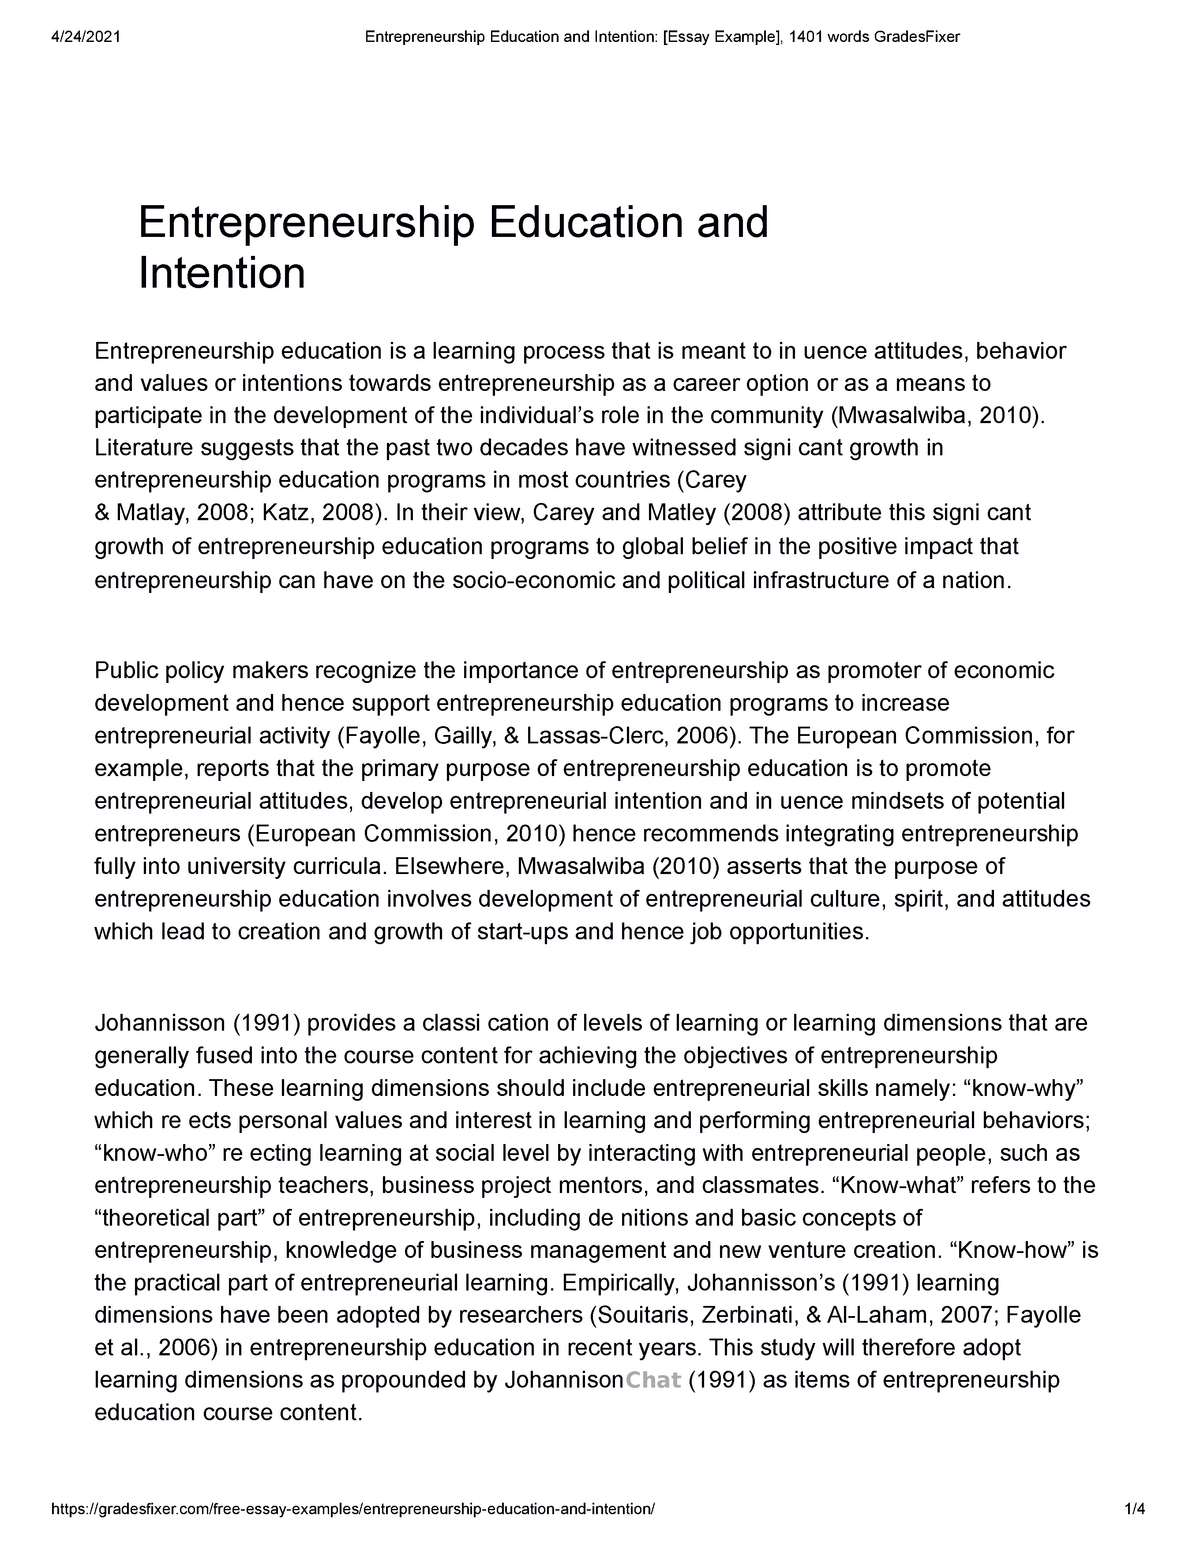 conclusion for entrepreneurship essay